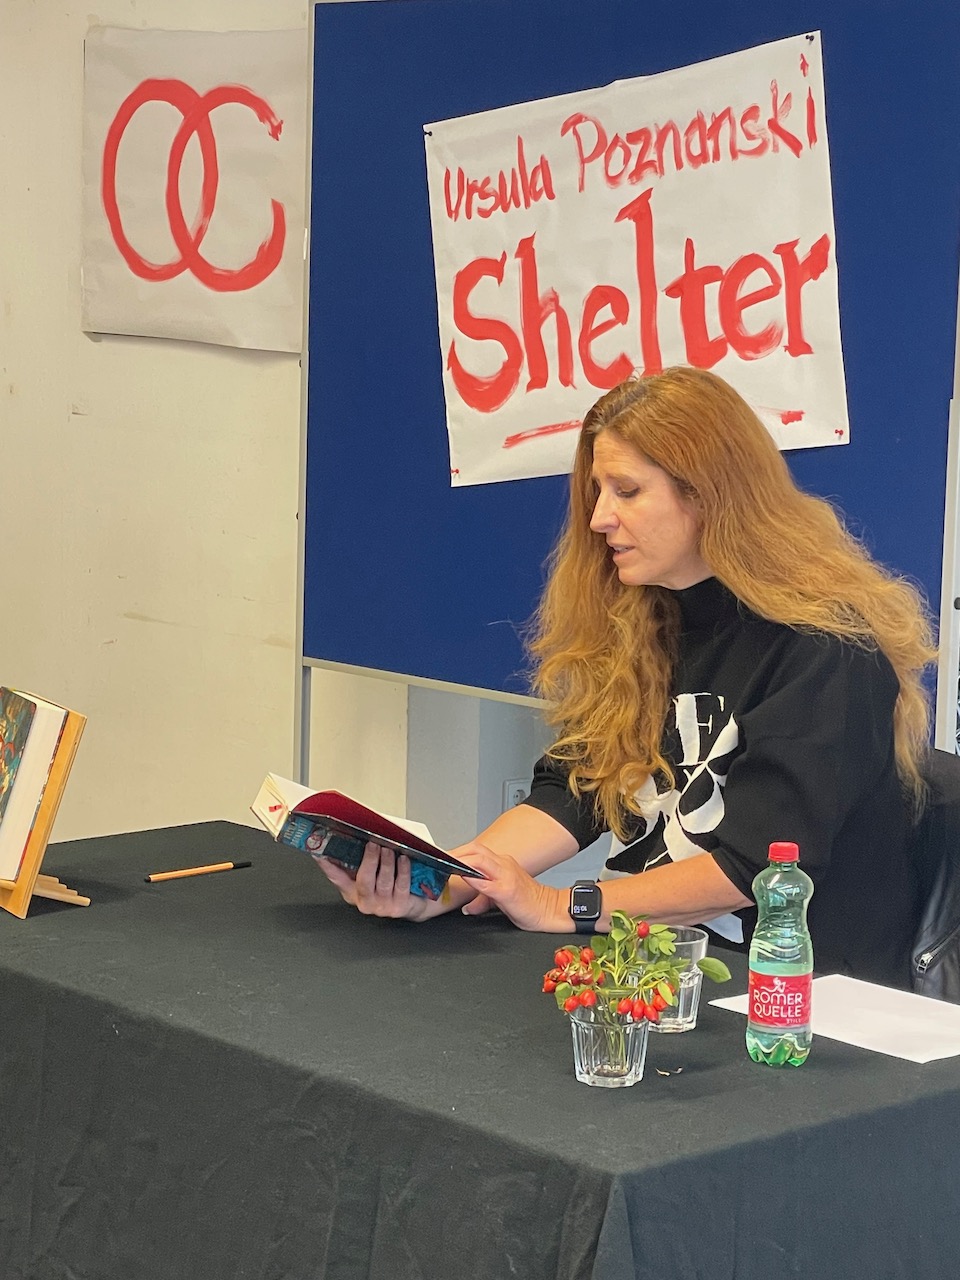 Ursula Poznanski liest aus "Shelter" vor.